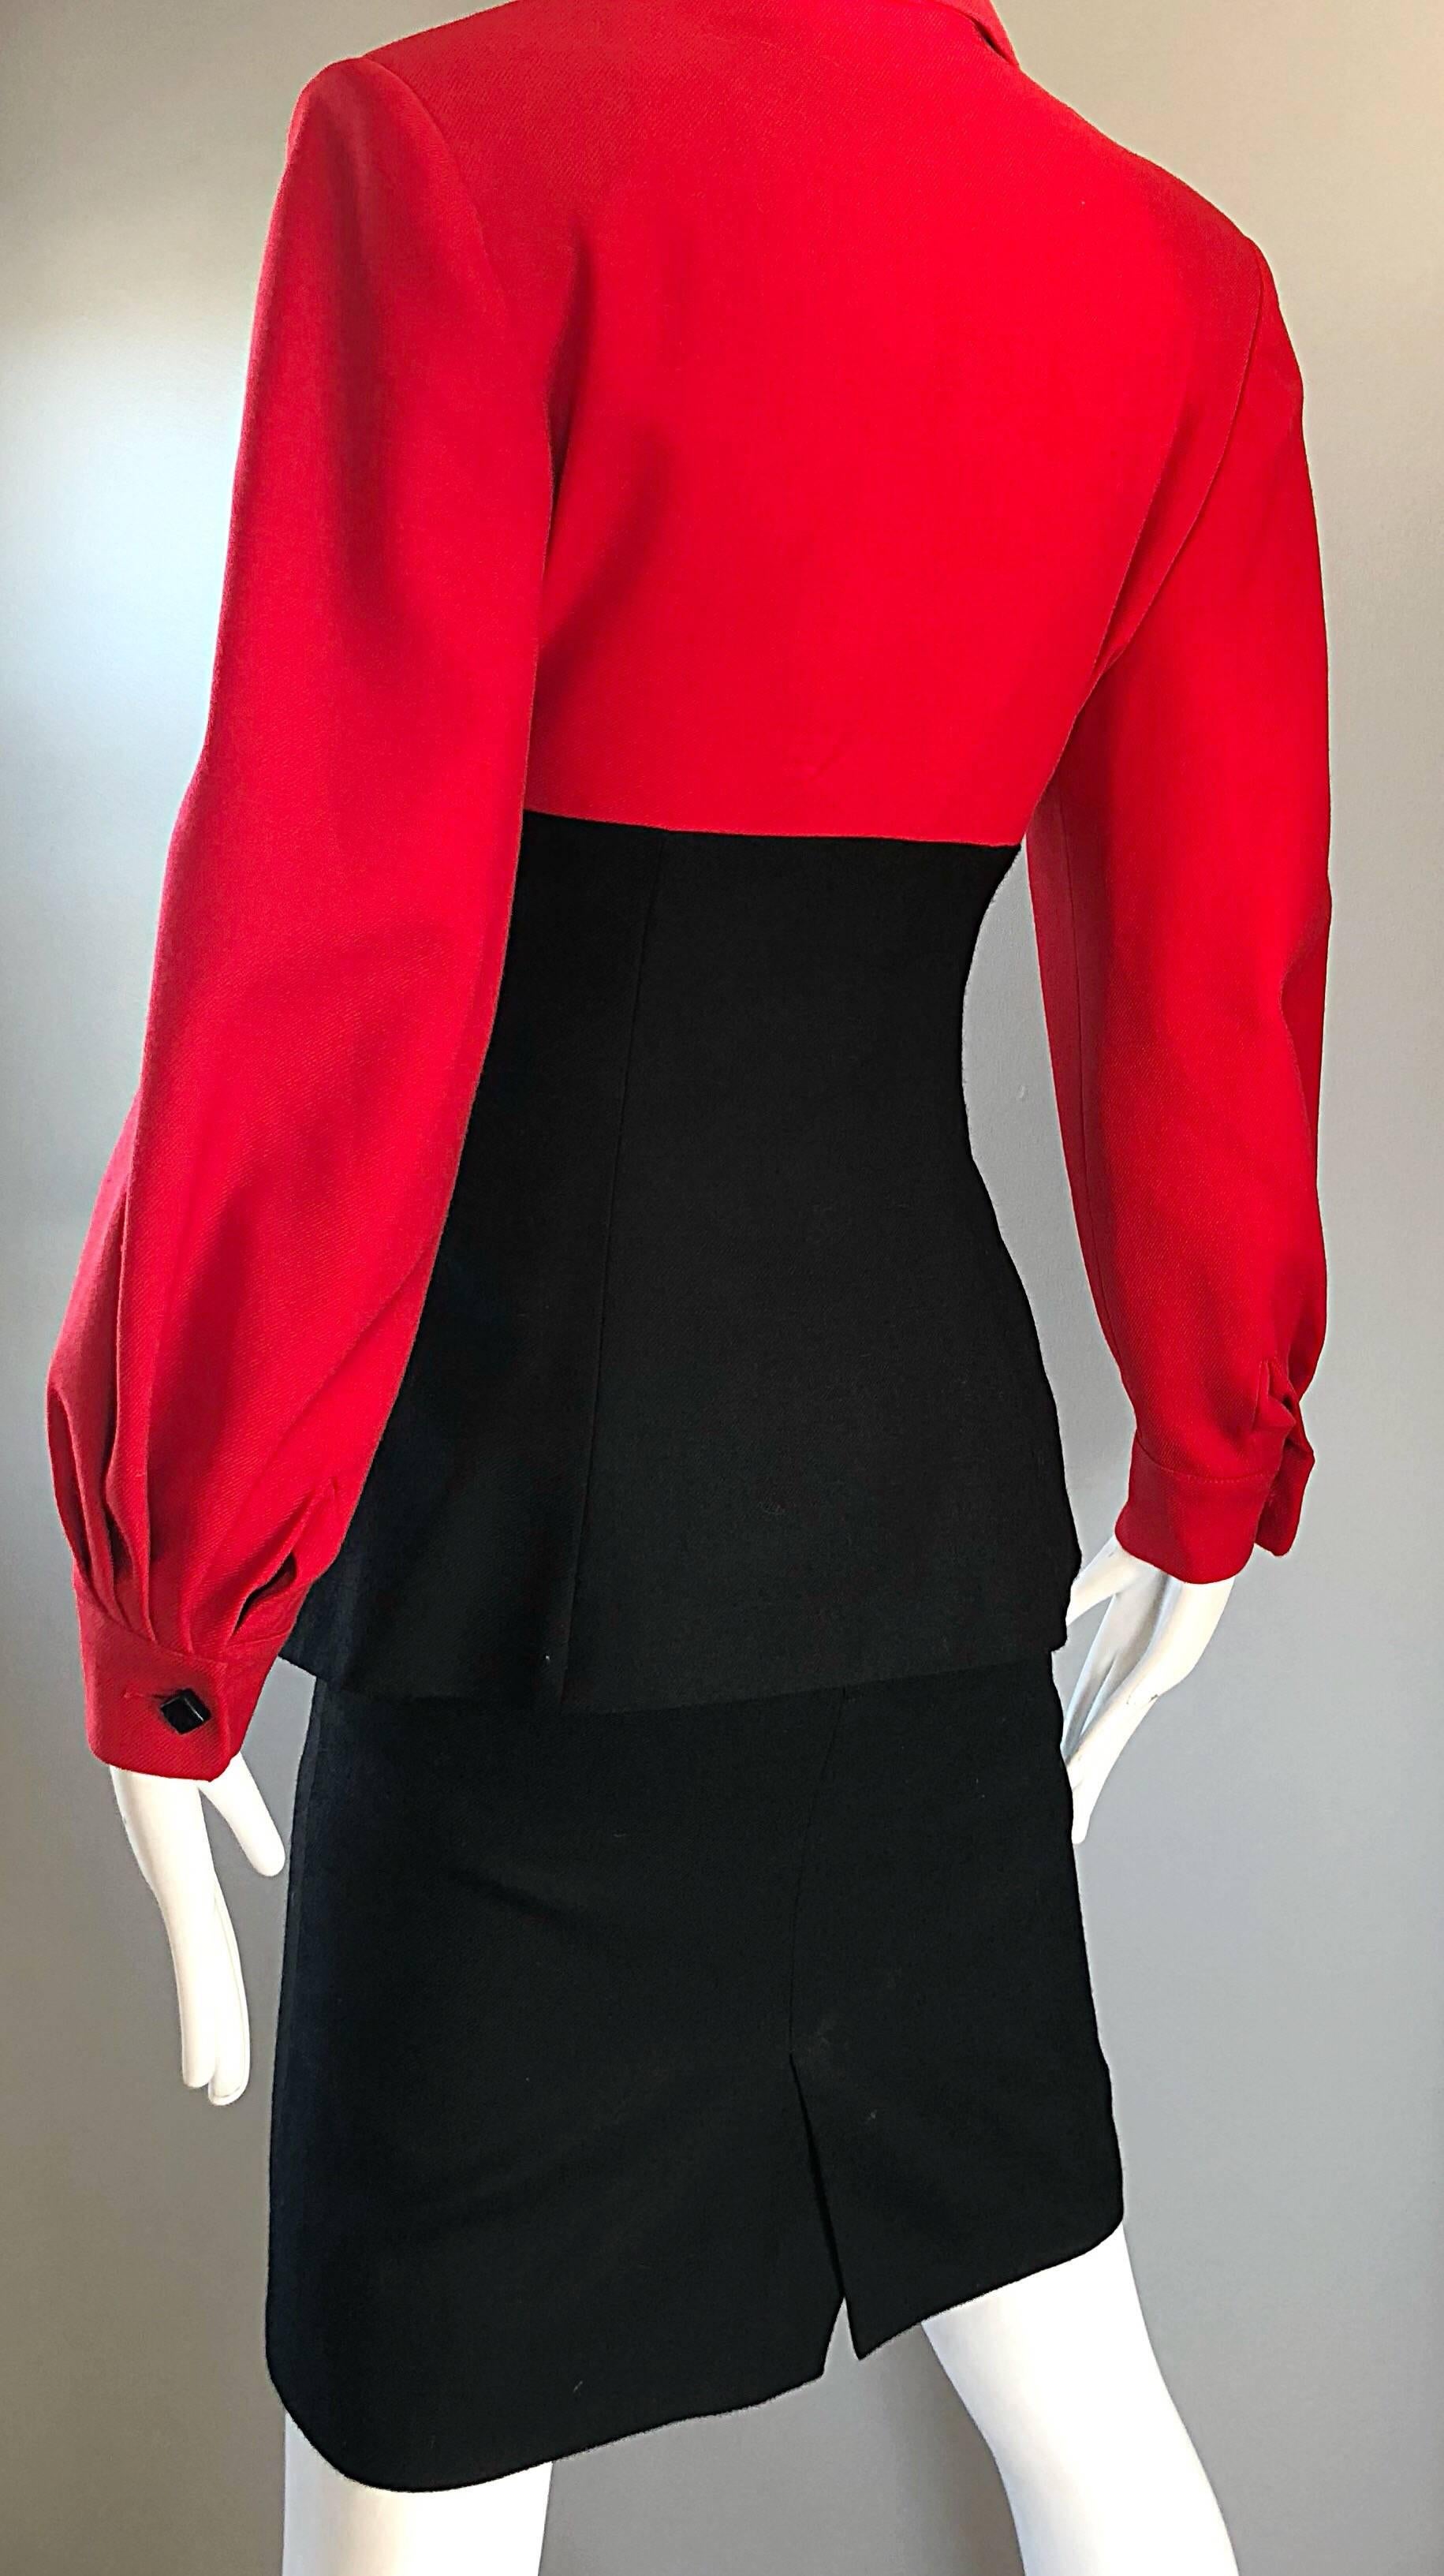 Patrick Kelly Vintage Lipstick Red and Black Color Block Avant Garde Skirt Suit 1